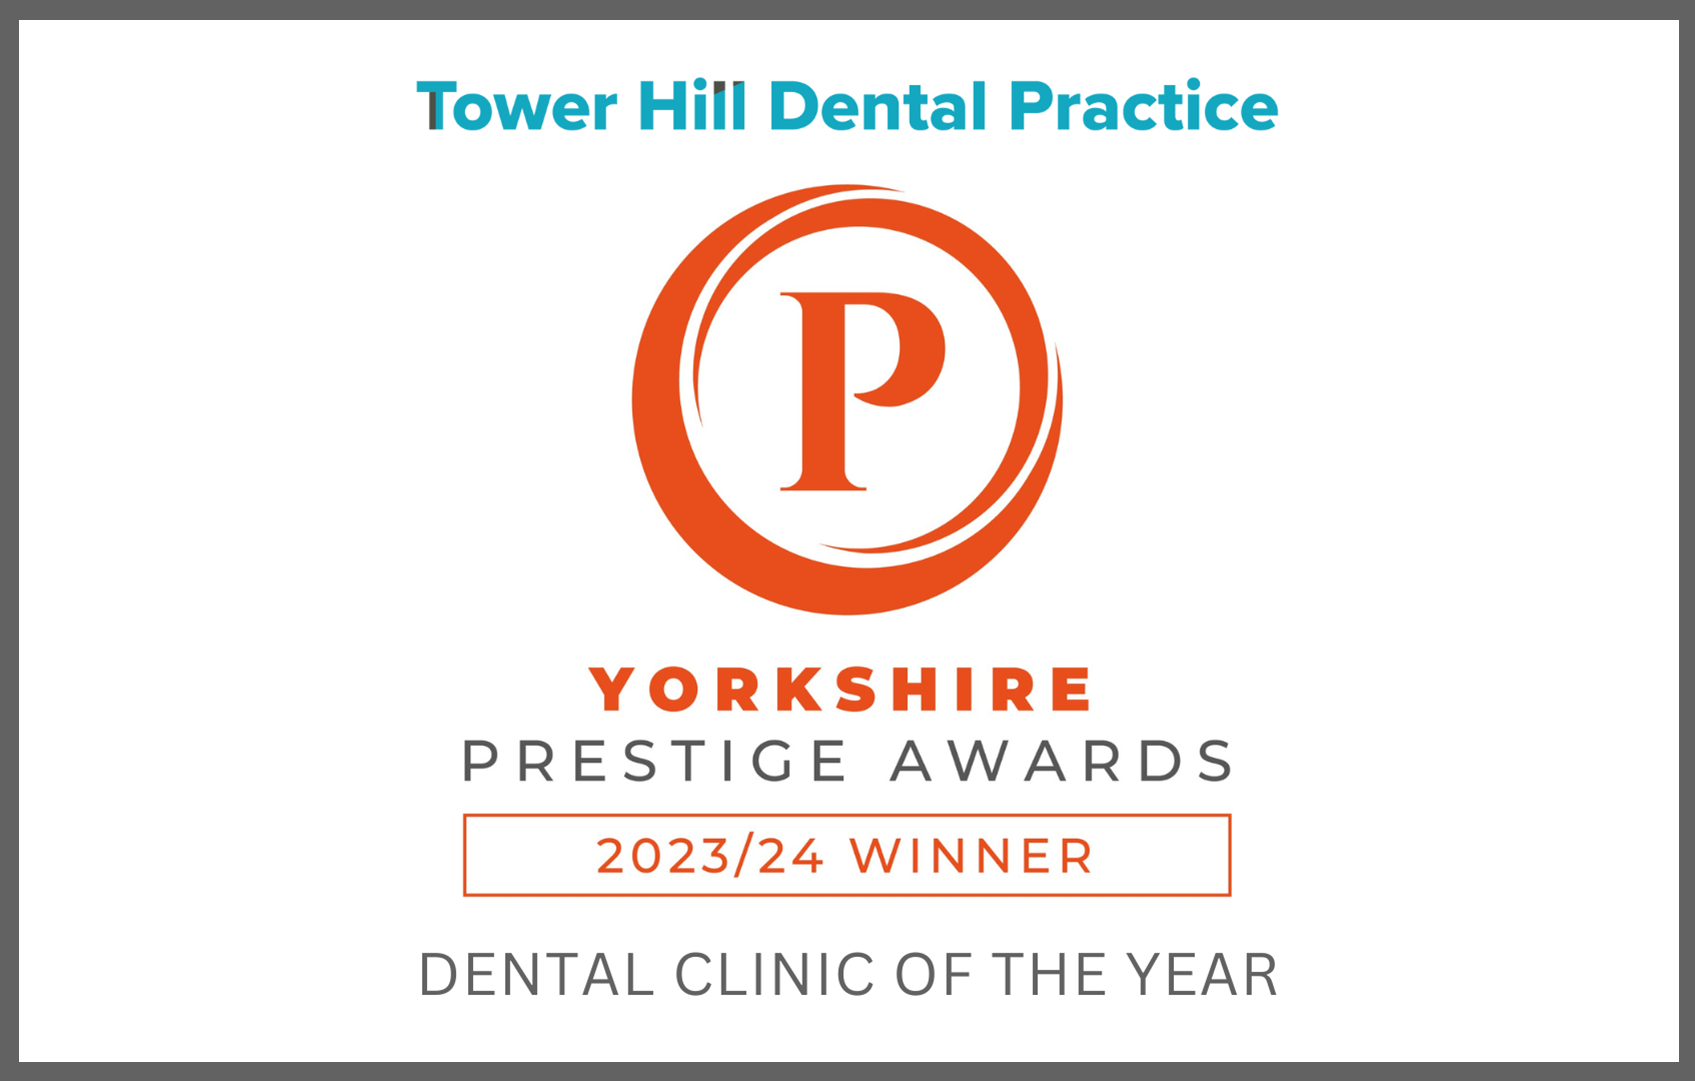 Tower Hill Dental Practice - Yorkshire Prestige Awards 2023/24 Winner - Dental Clinic of the Year.